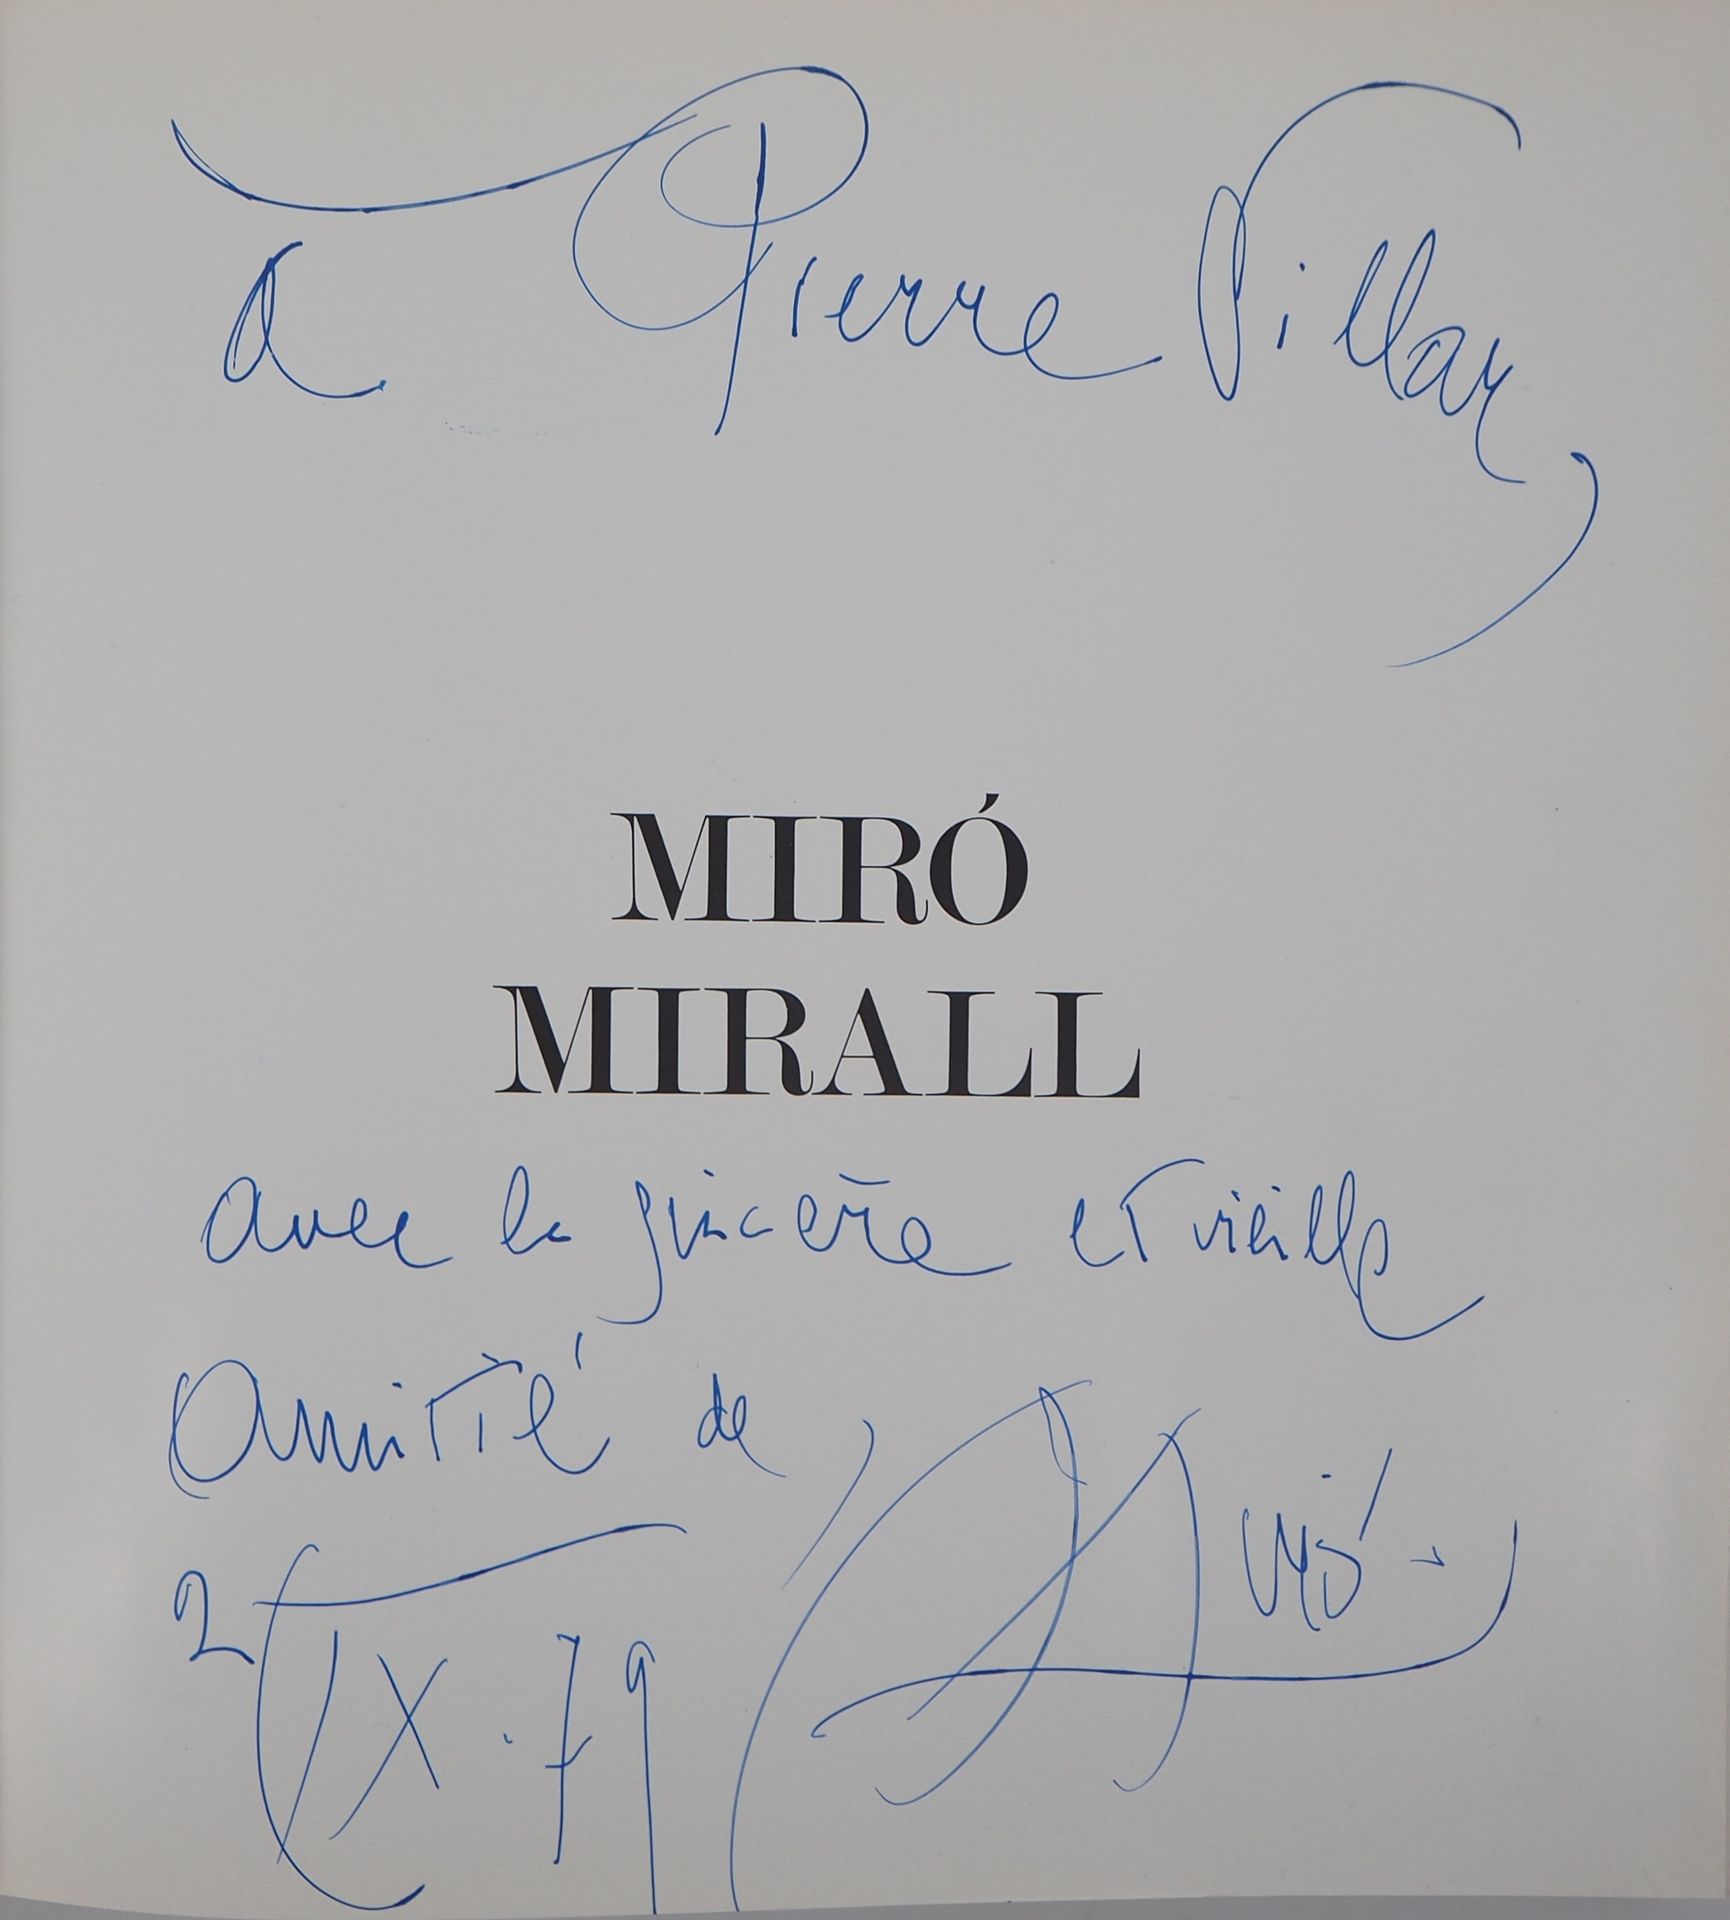 Joan Miro 琼-米罗

亲笔签名献词

"致皮埃尔-维拉尔，带着真诚和古老的友谊

印象深刻的米罗签名，右下方

日期：1979年9月2日

 

 尺&hellip;